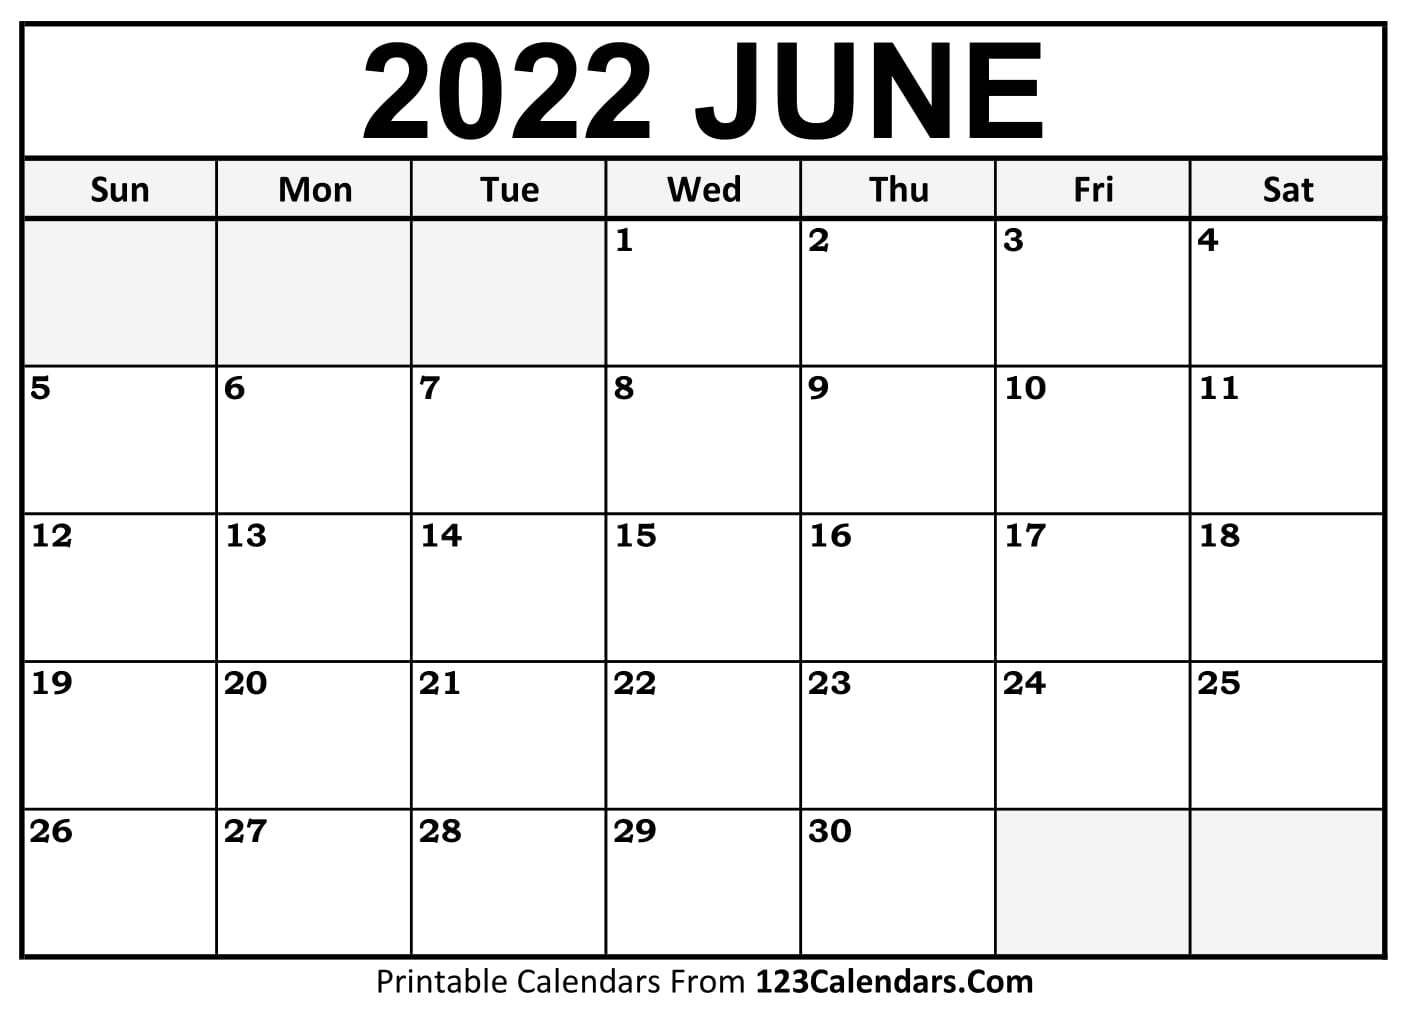 Printable Blank Calendar June 2022 Printable June 2022 Calendar Templates - 123Calendars.com